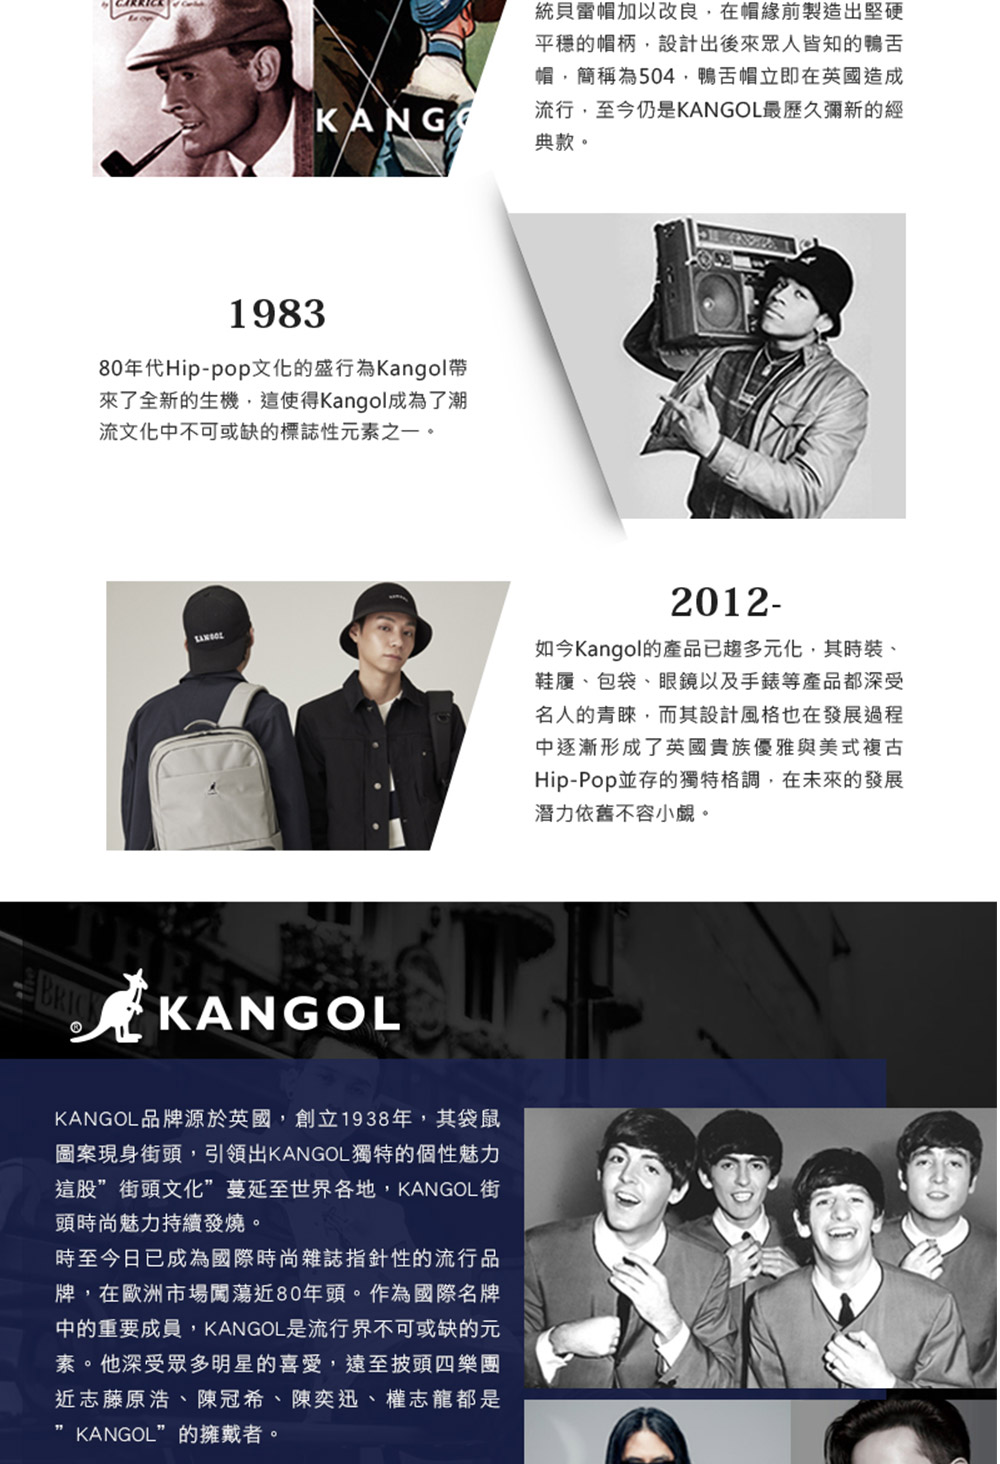 KANGOL品牌源於英國,創立1938年,其袋鼠